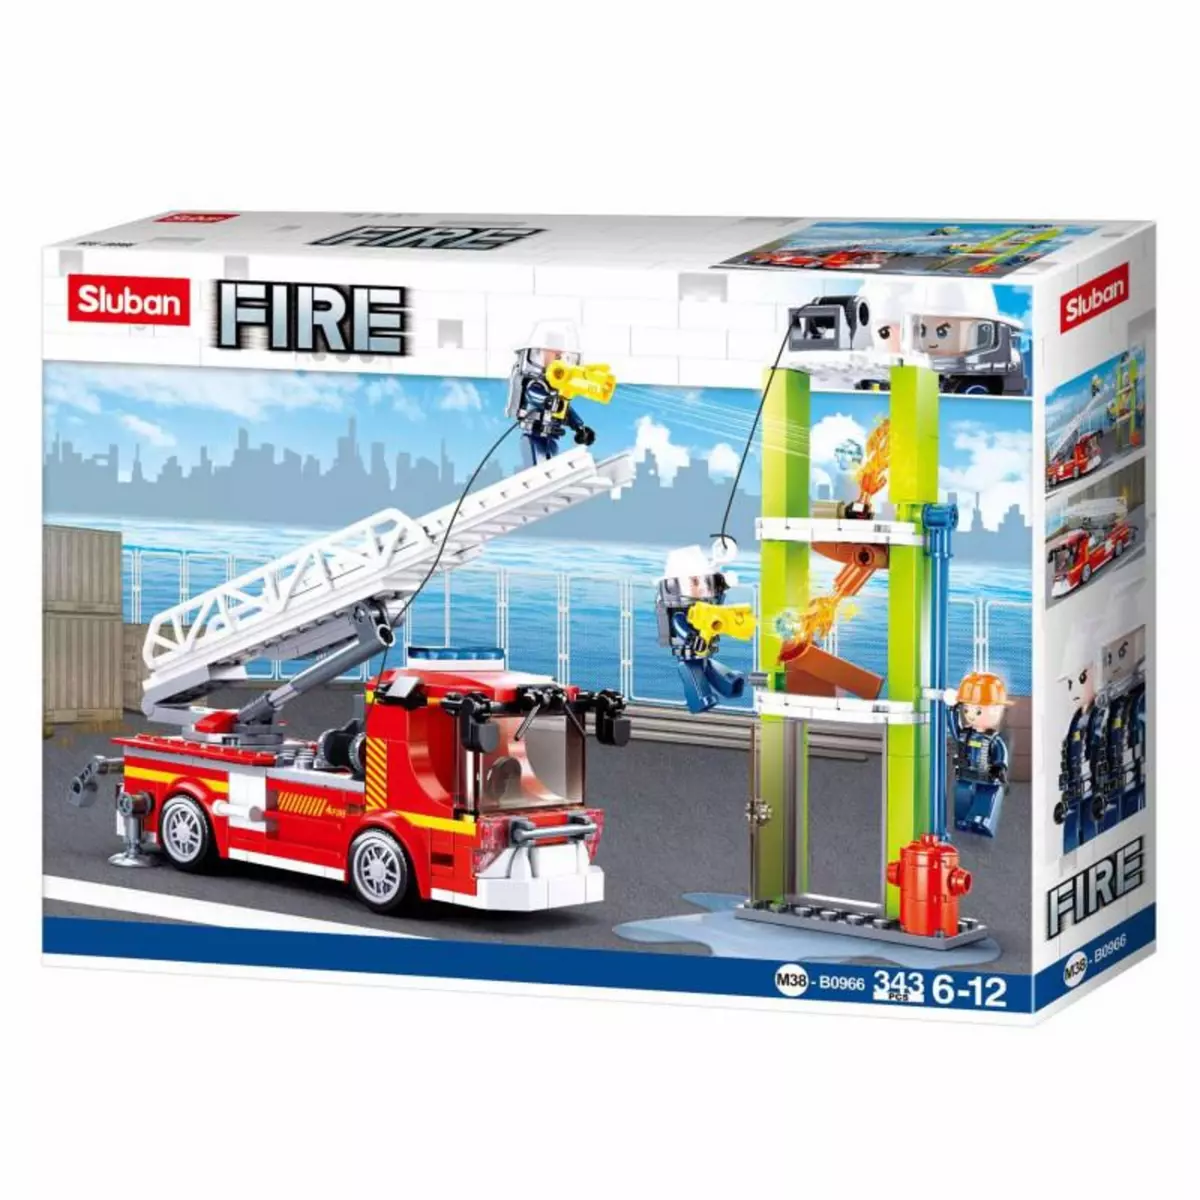 Sluban Sluban Fire Department Ladder Truck Exercise M38-B0966